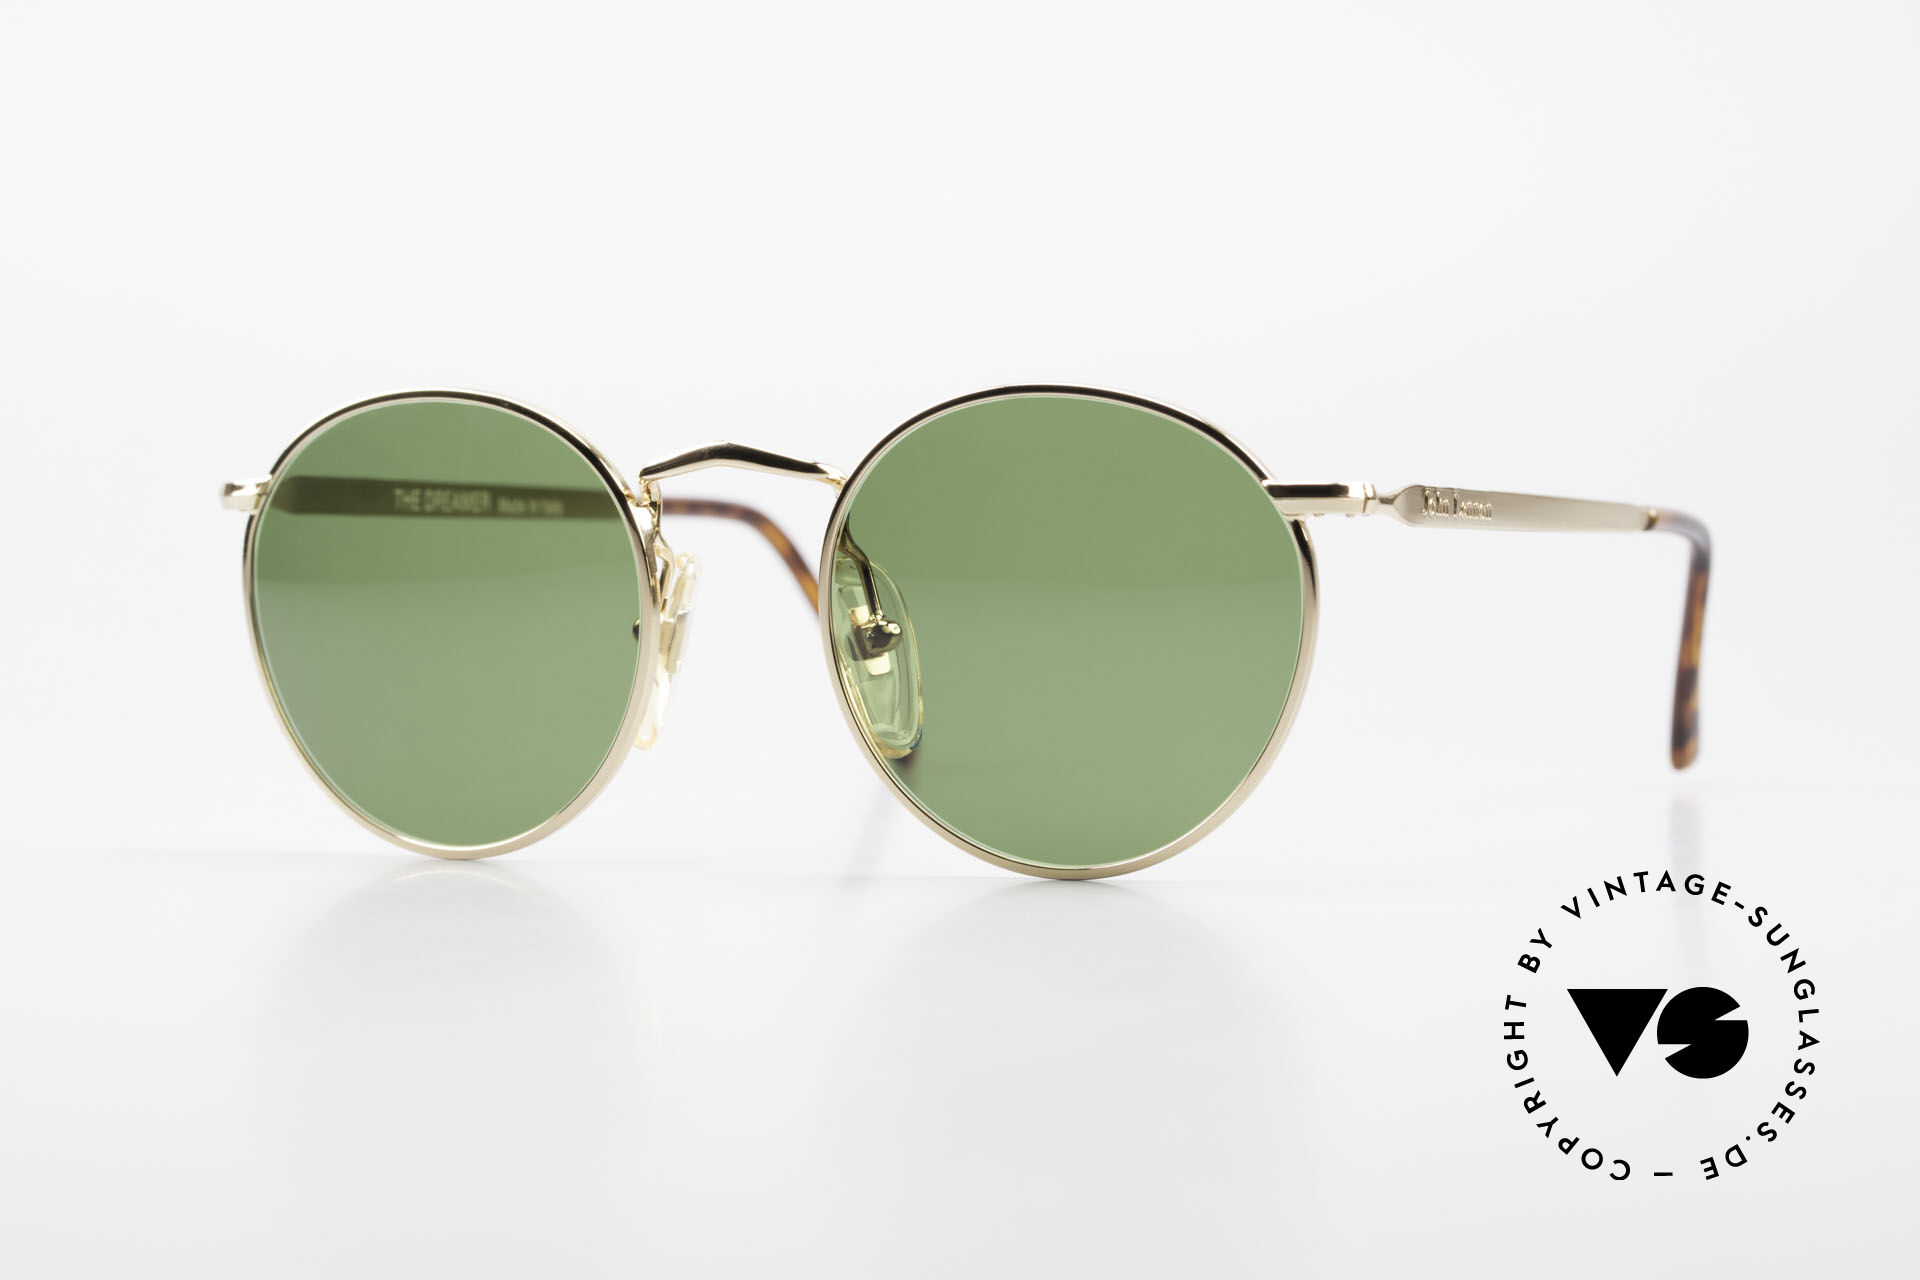 Lennon - The Dreamer Original Collection Glasses